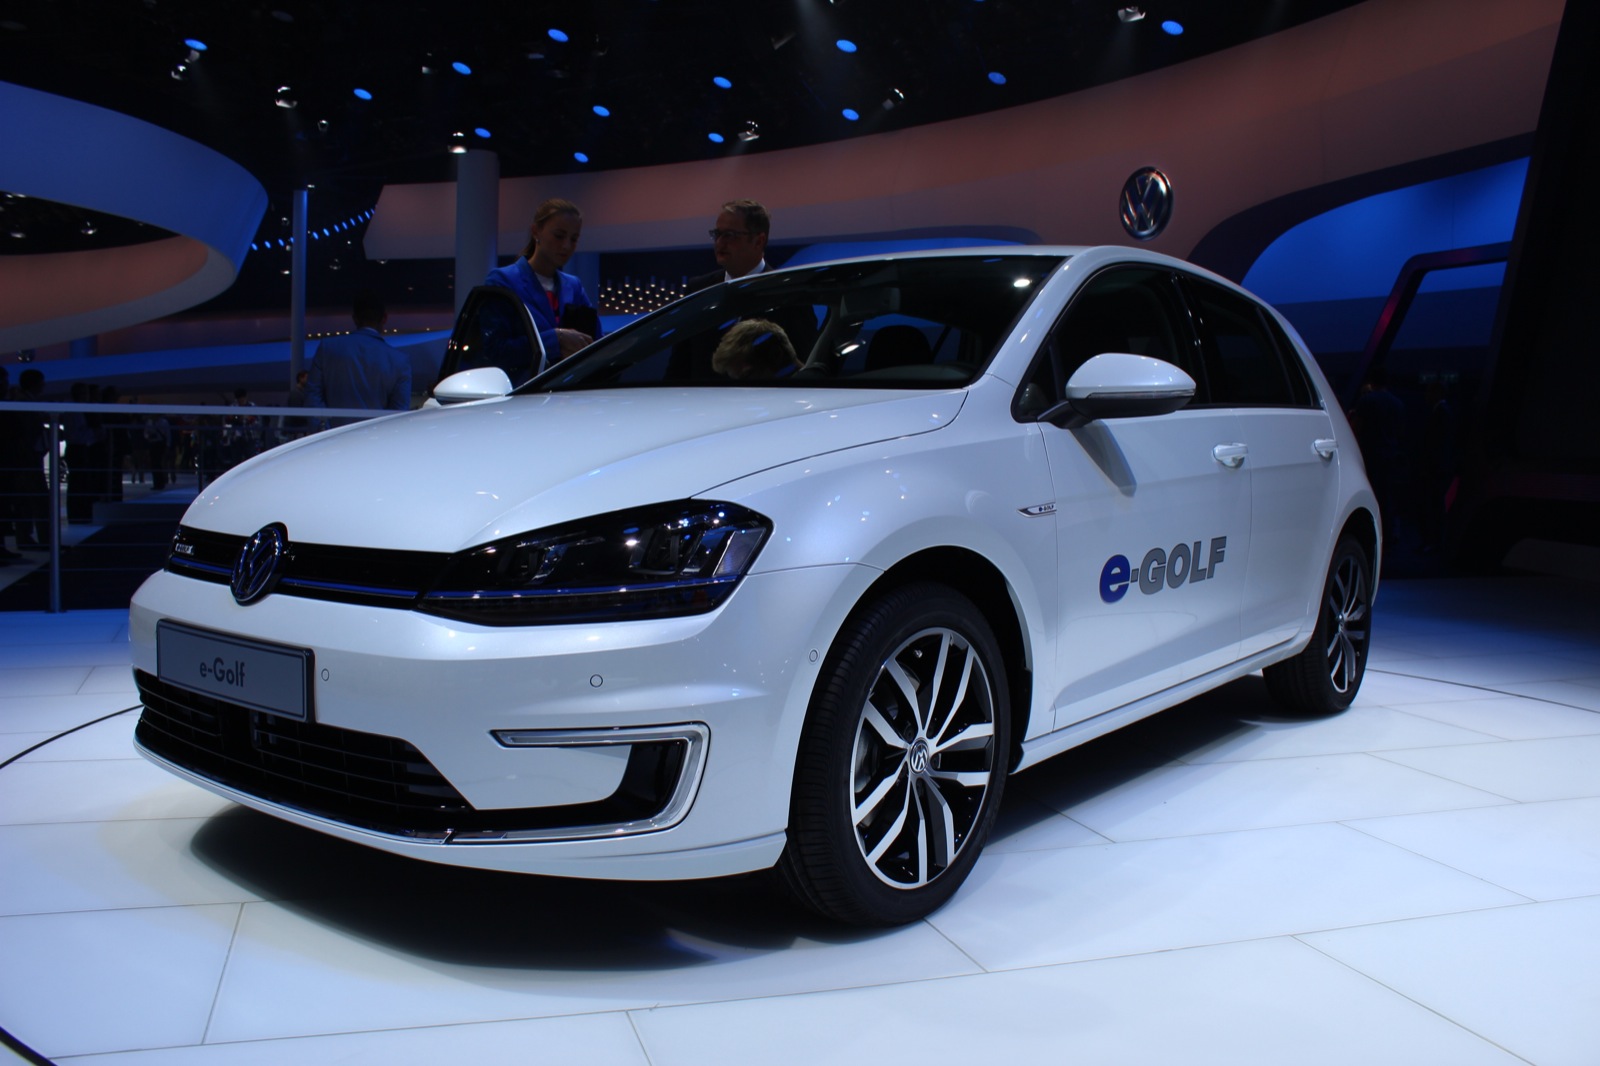 Volkswagen e-Golf Electric Car Live Gallery: 2013 Frankfurt Auto Show